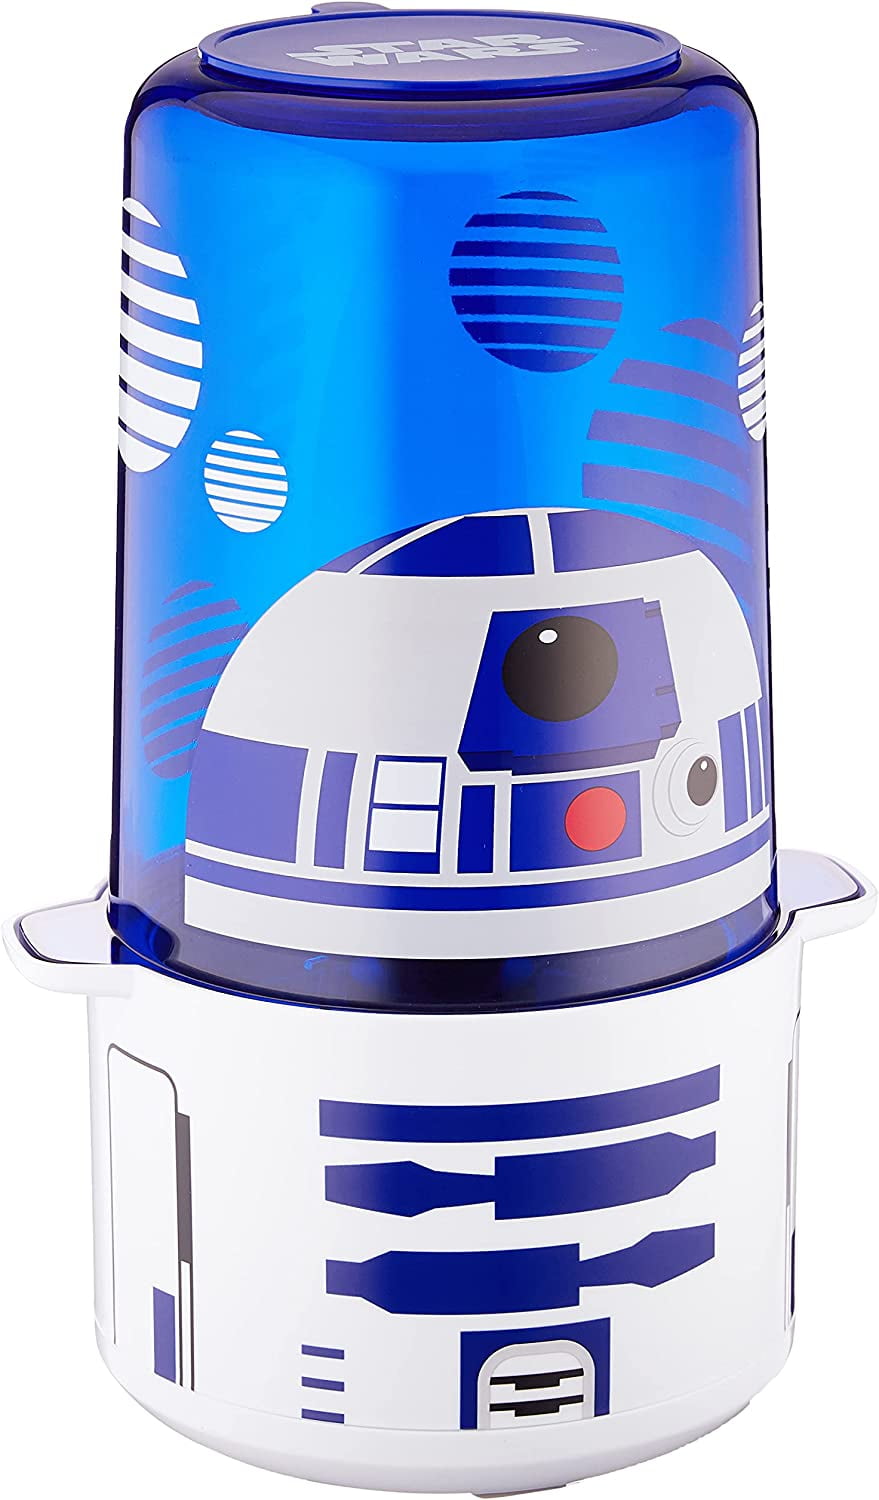 DIY Star Wars R2-D2 Bowl – Popcorner Reviews